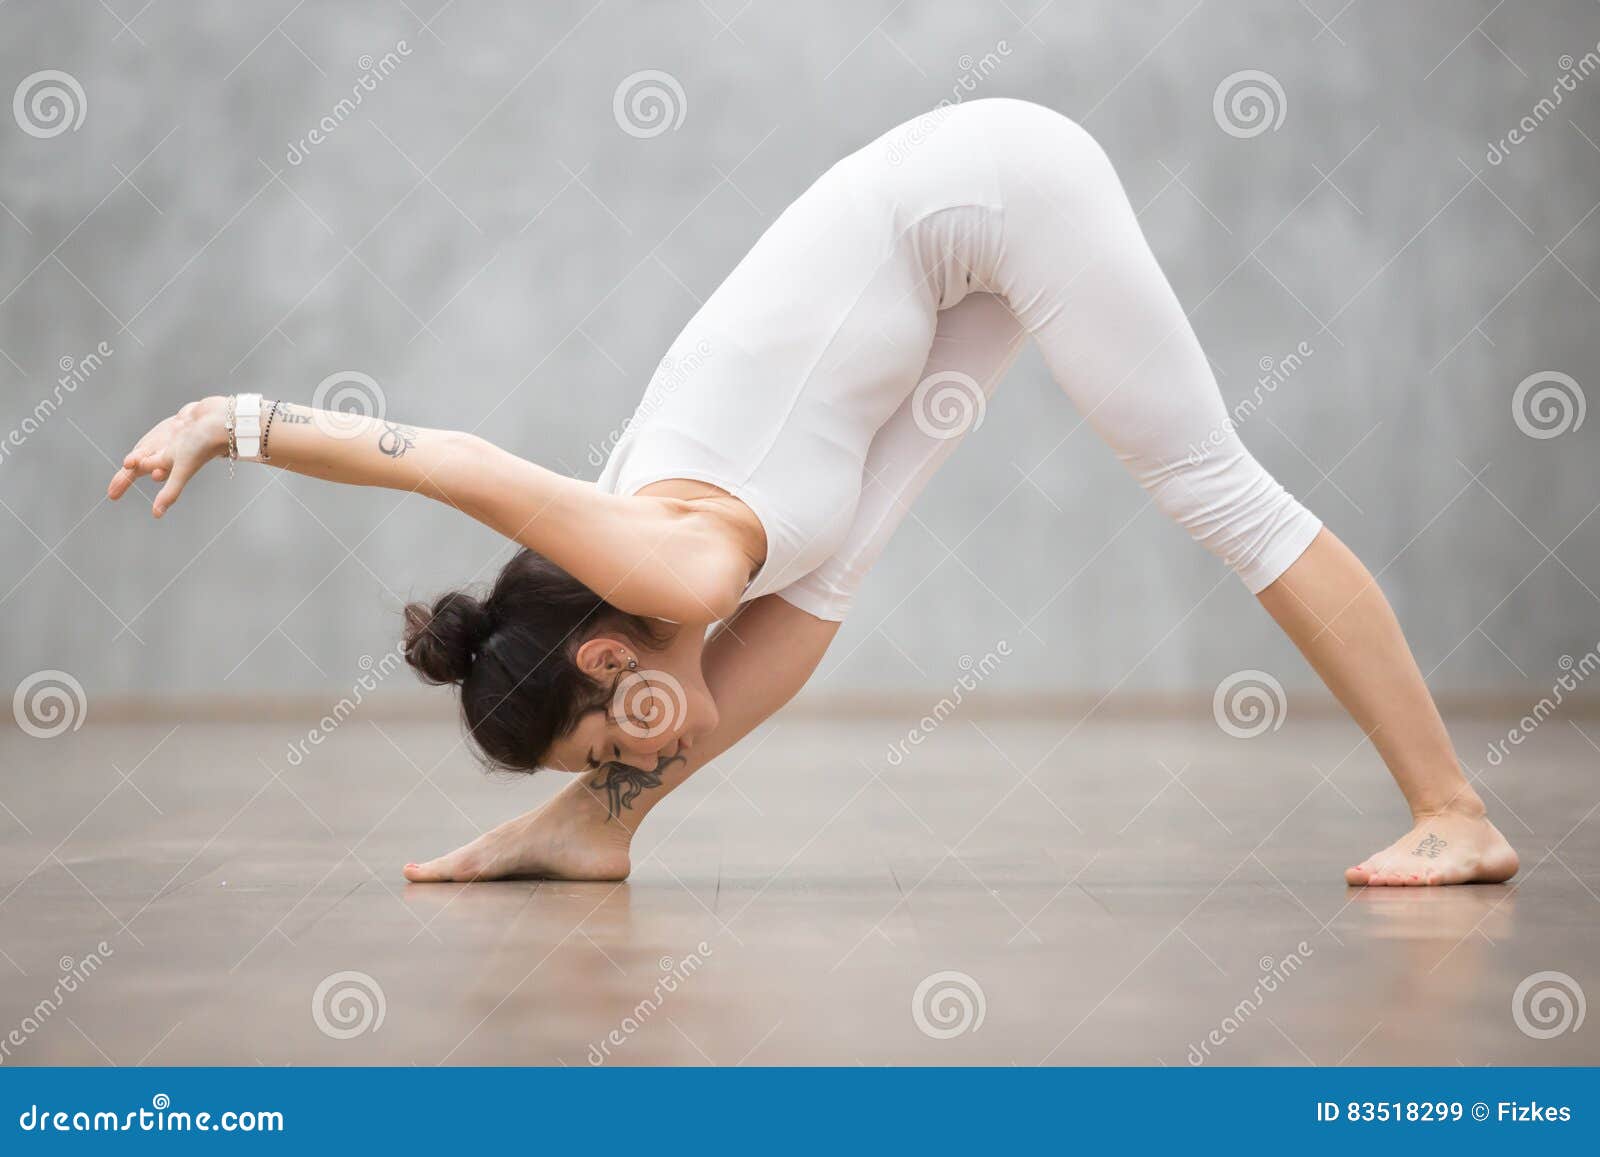 Playful Full Body Yoga to Feel Good - 40 Mins of Fun Yoga | Yoga with Kate  Amber - YouTube